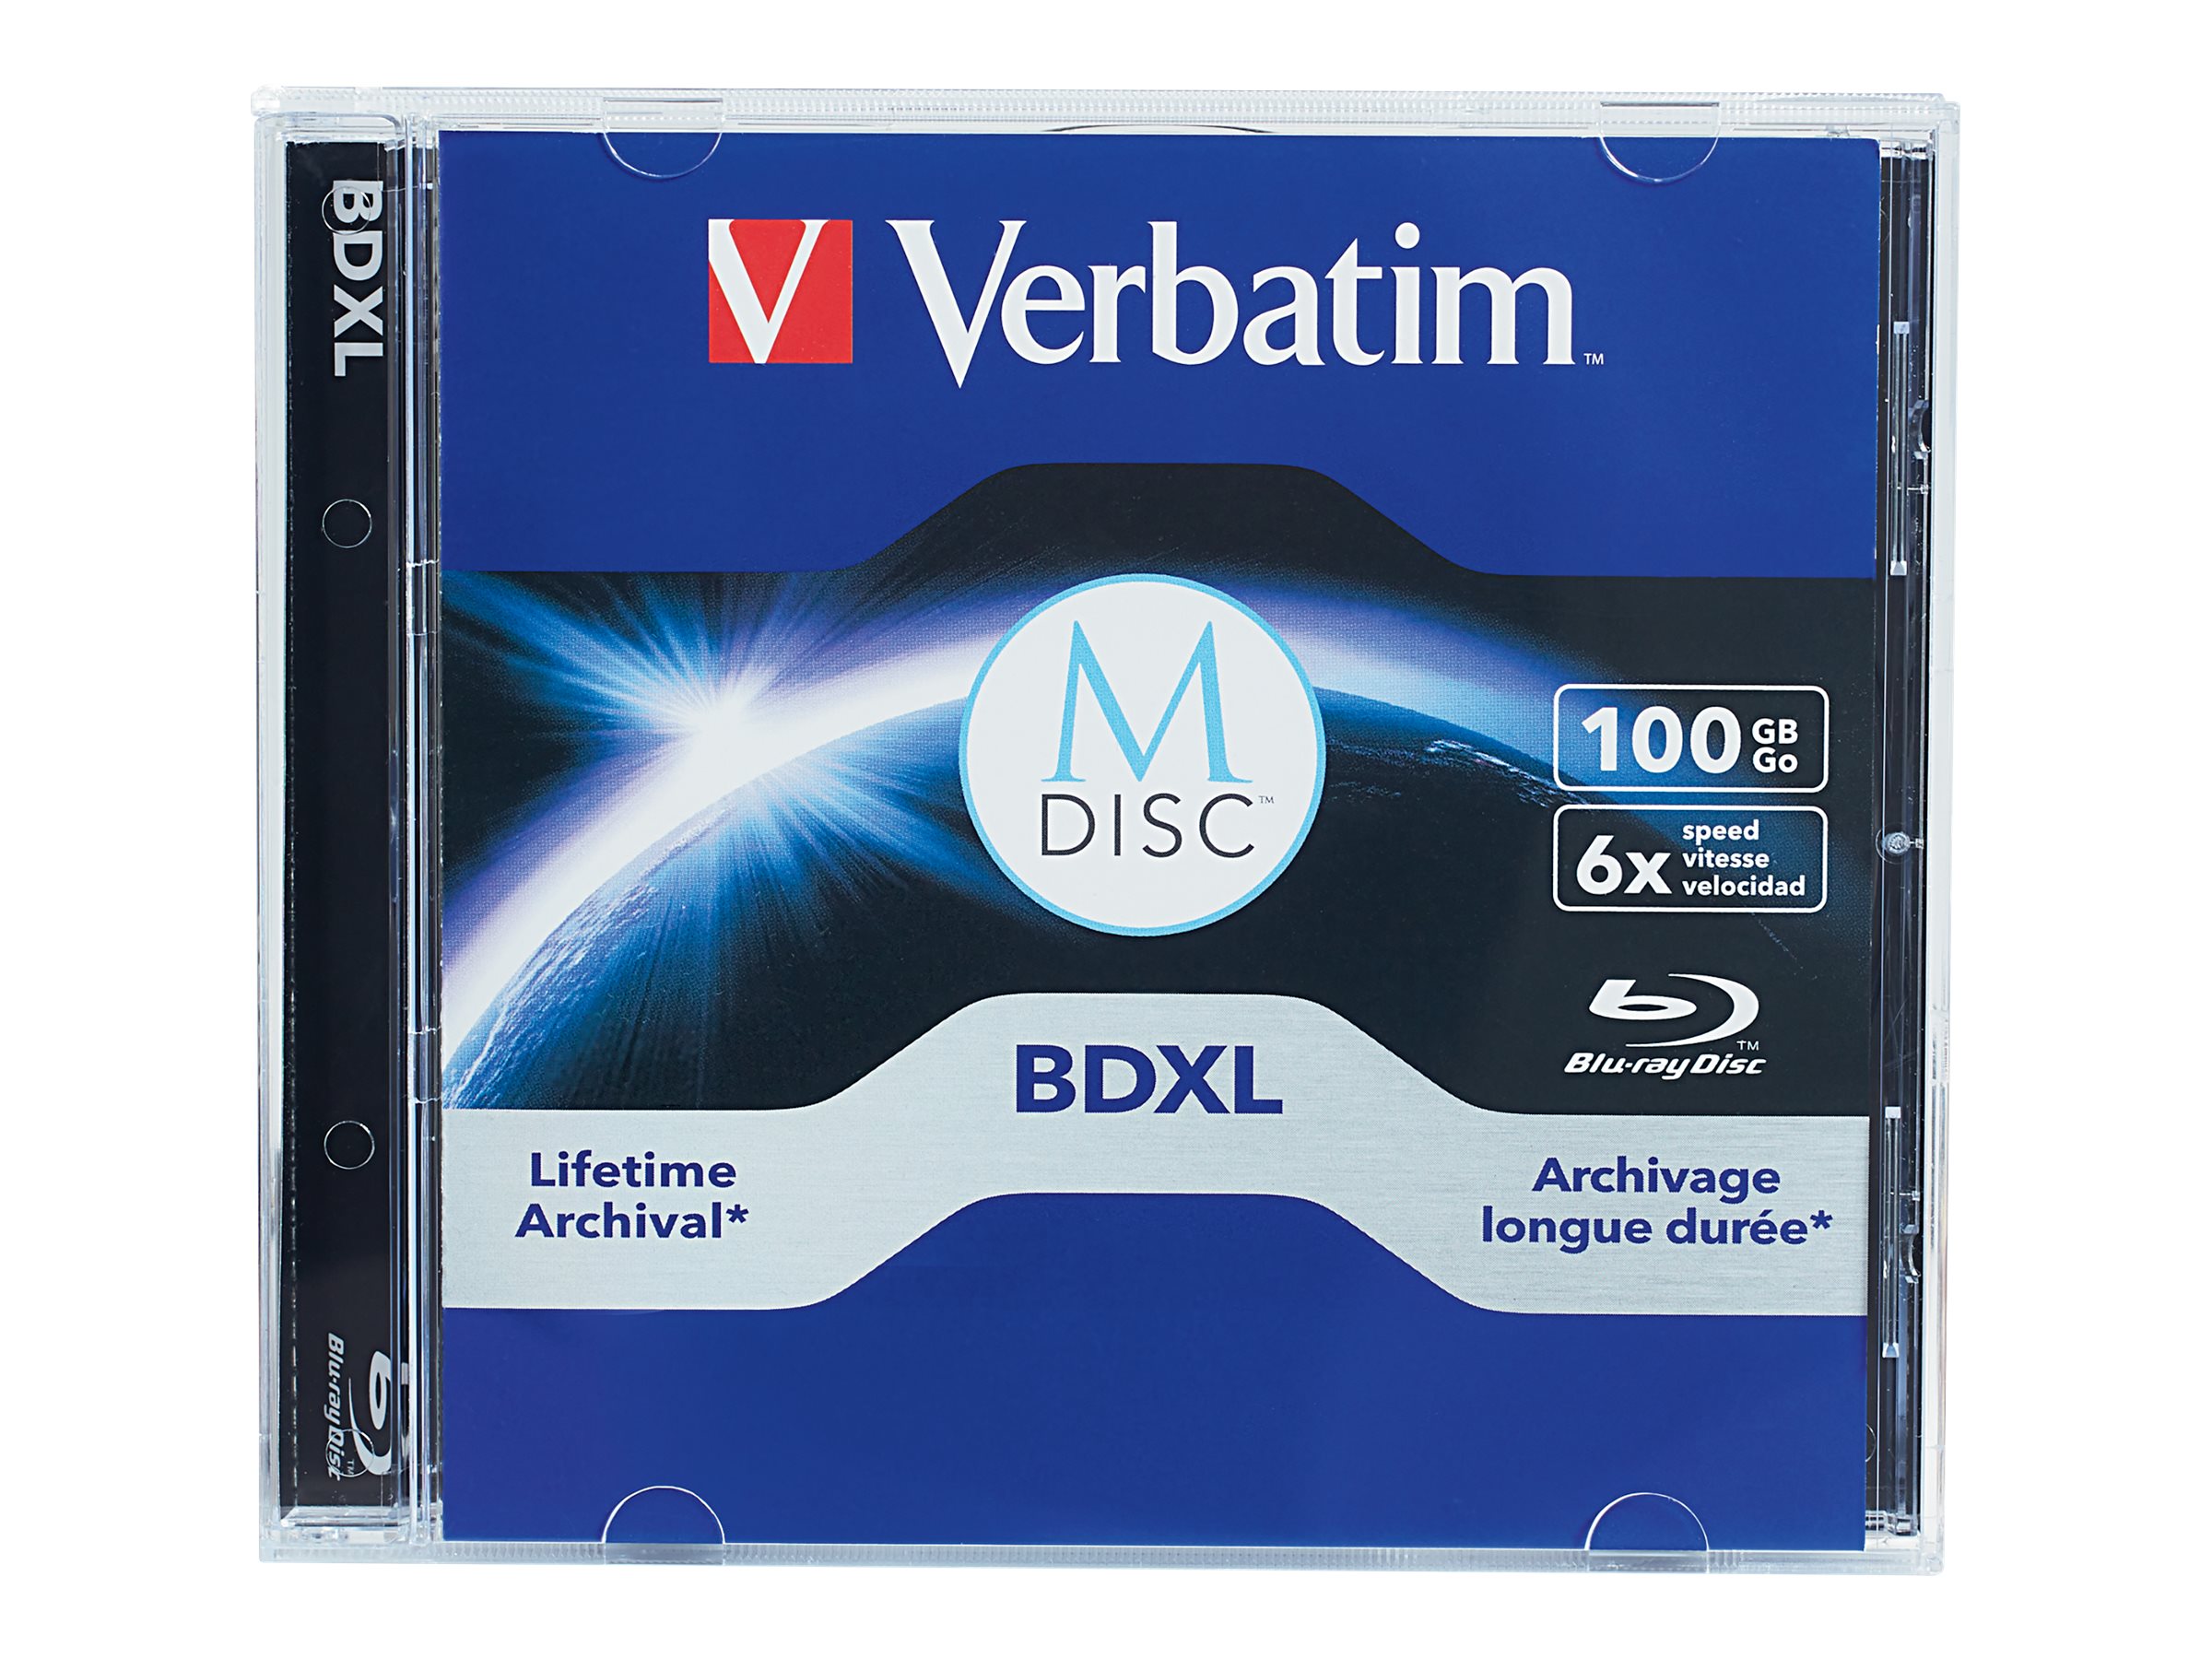 radium software politik Verbatim M-Disc - M-DISC BDXL | www.publicsector.shidirect.com